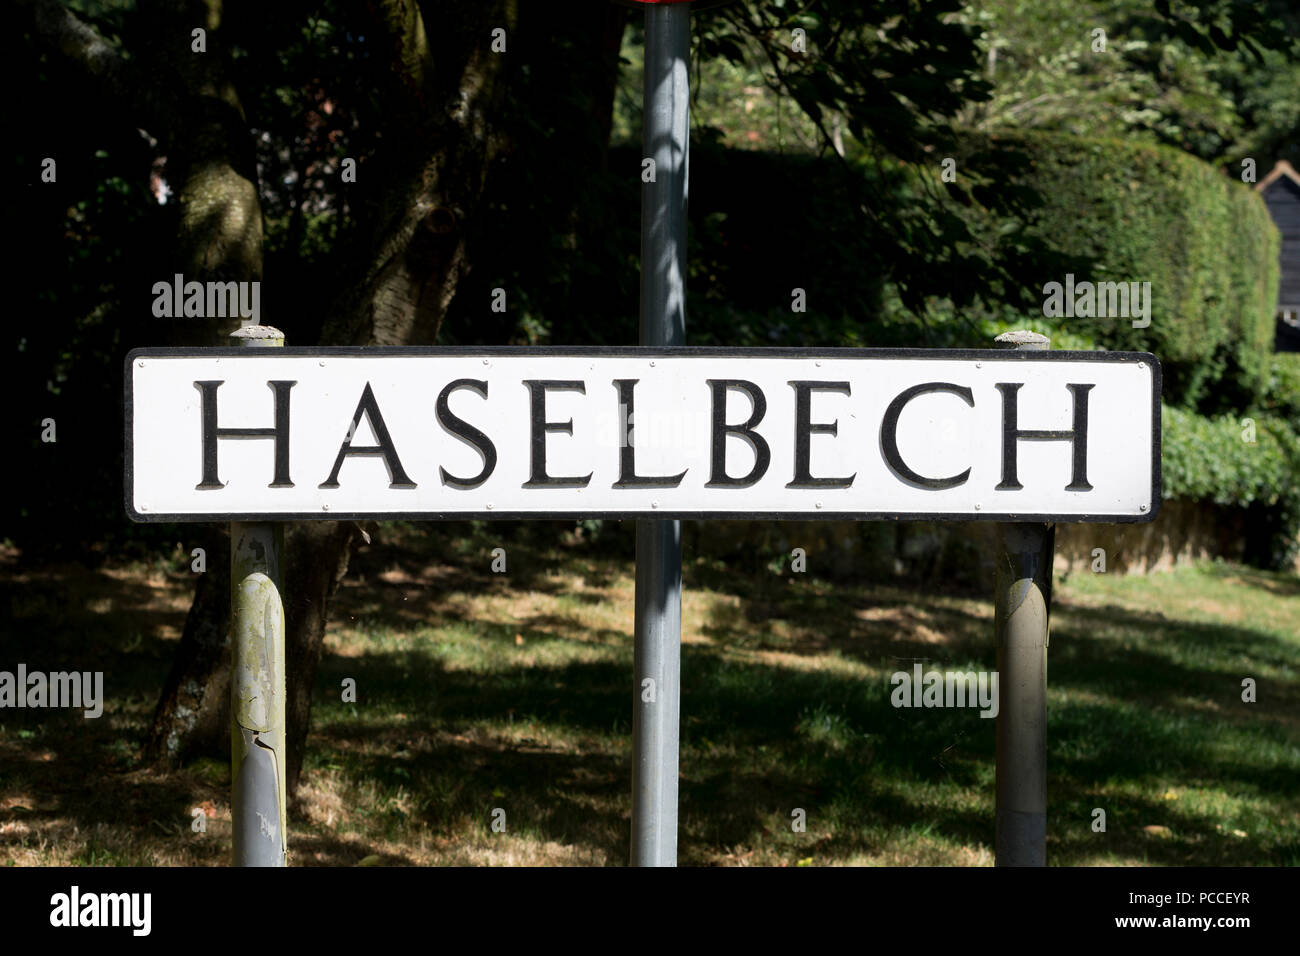 Haselbech village sign, Northamptonshire, England, UK Stock Photo